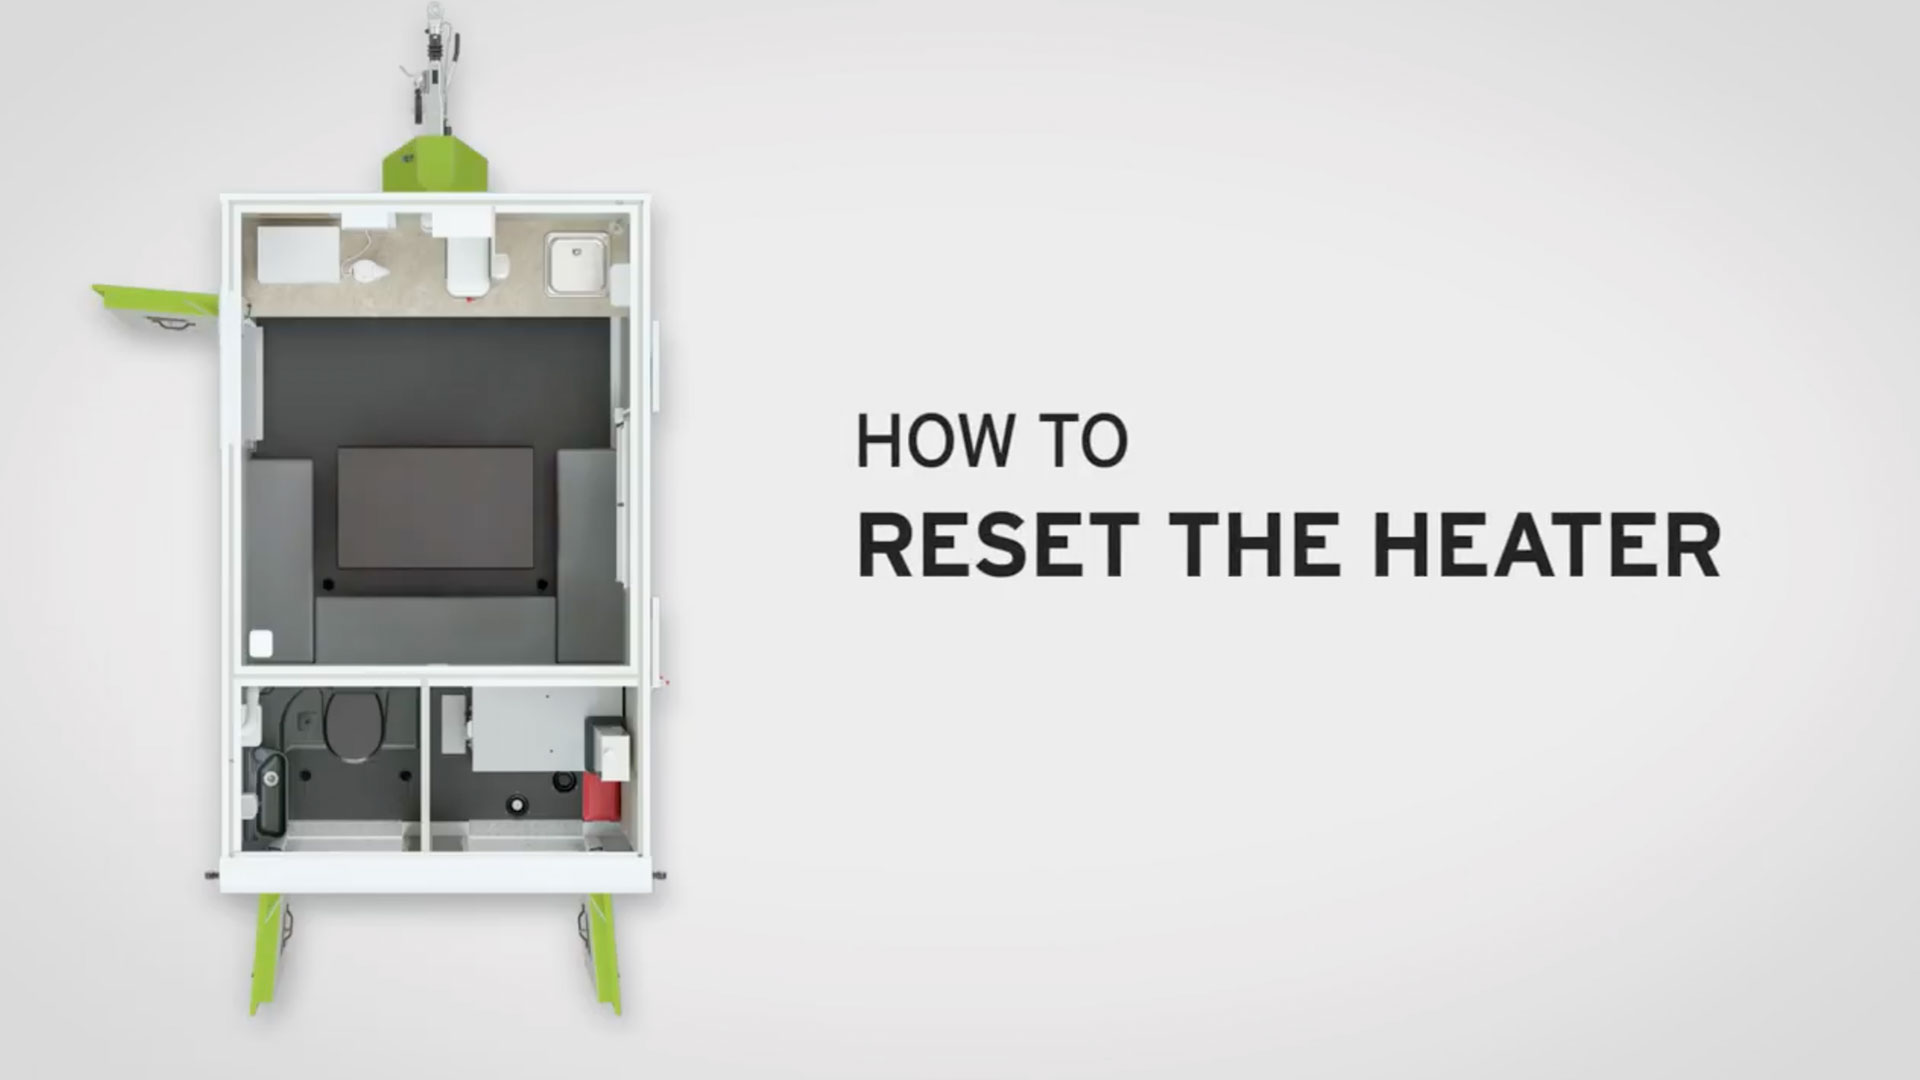 Webasto - Reset the heating system